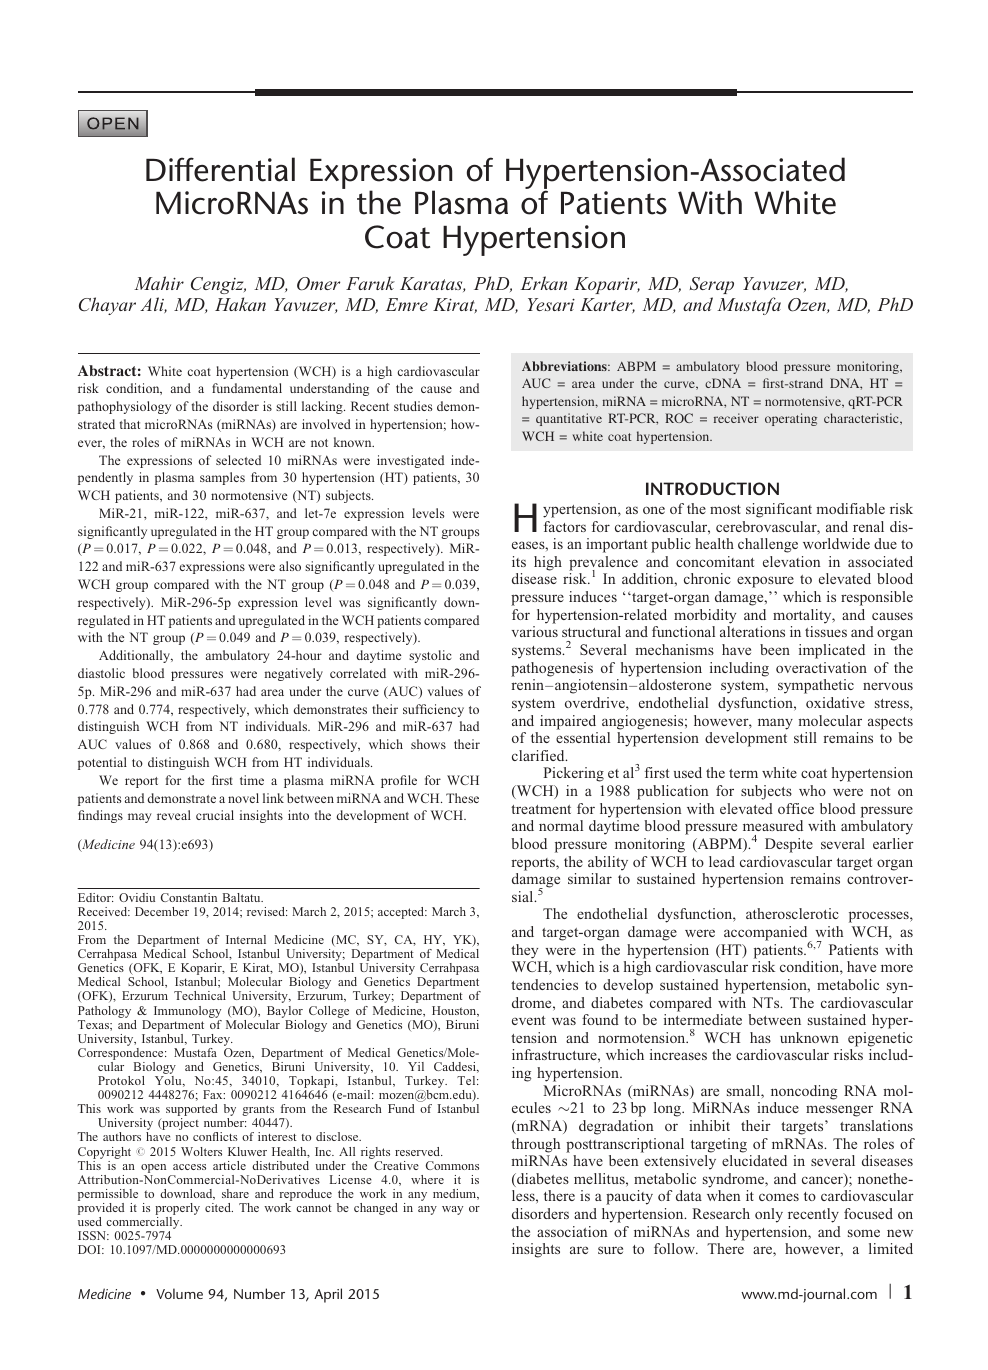 hypertension research journal abbreviation